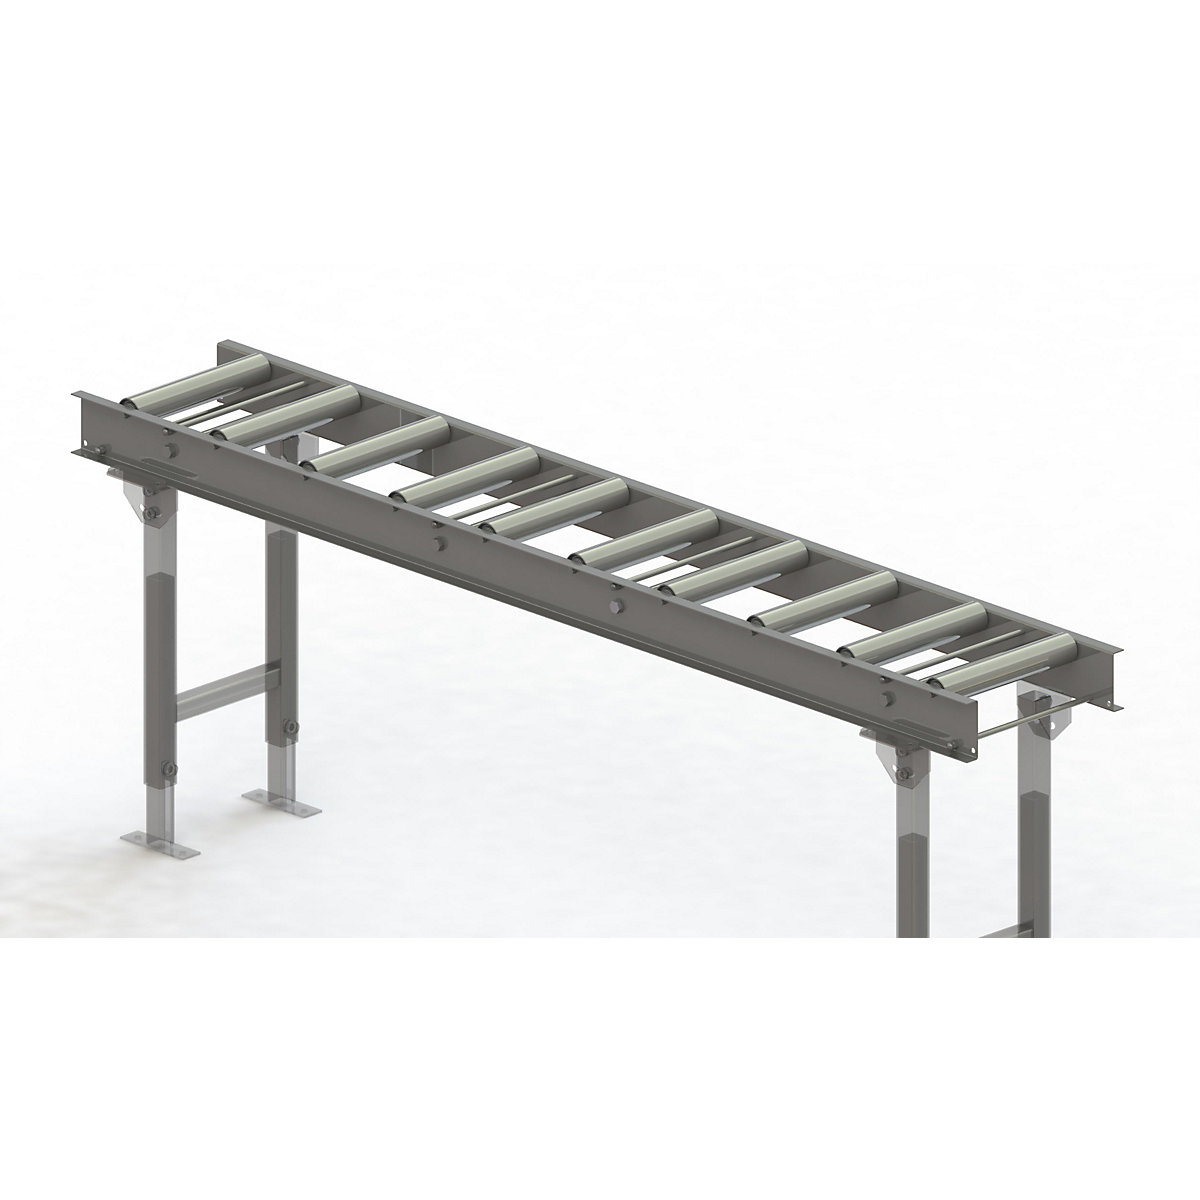 Gura – Roller conveyor, steel frame with zinc plated steel rollers, track width 300 mm, distance between axles 200 mm, length 2 m